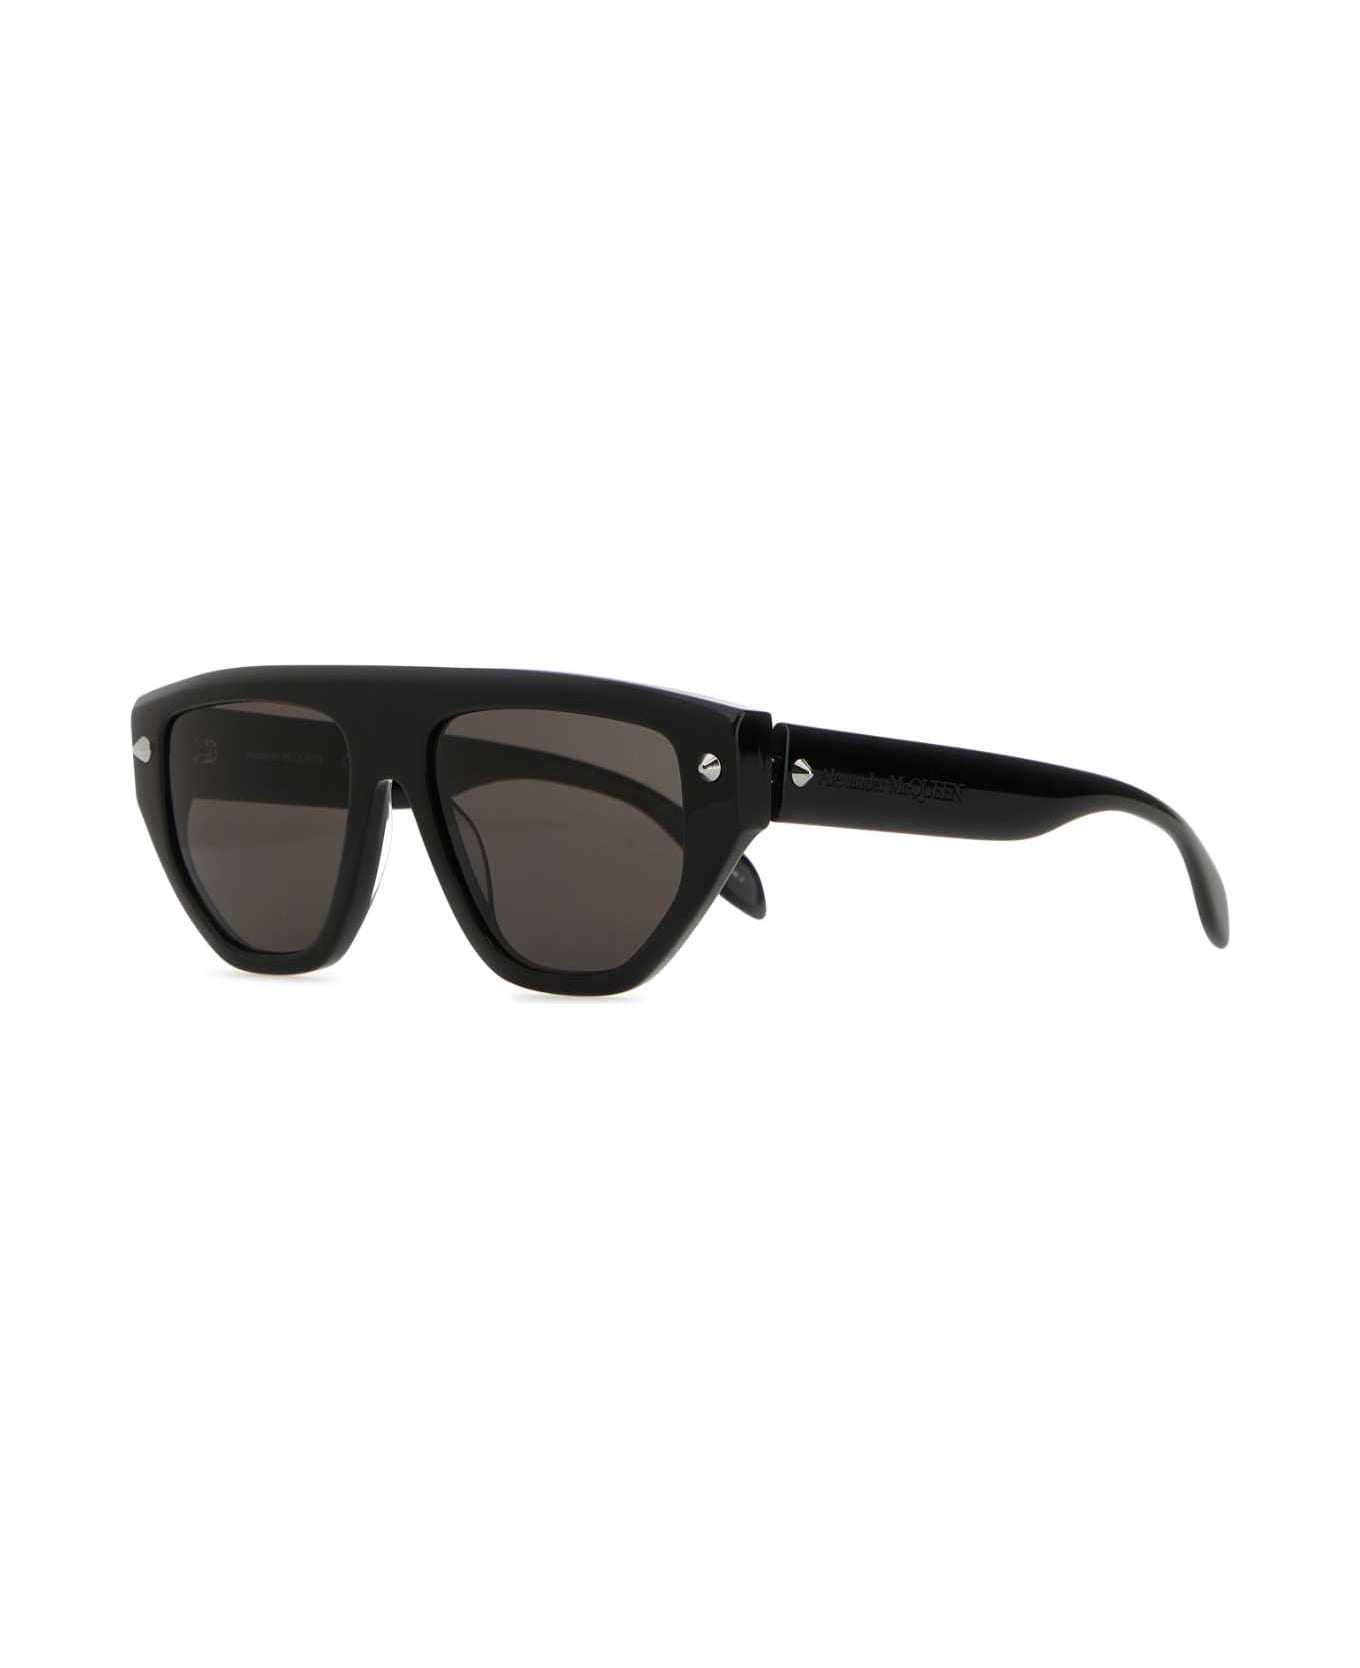 Alexander McQueen Black Acetate Sunglasses - BLACK-BLACK-SMOKE サングラス